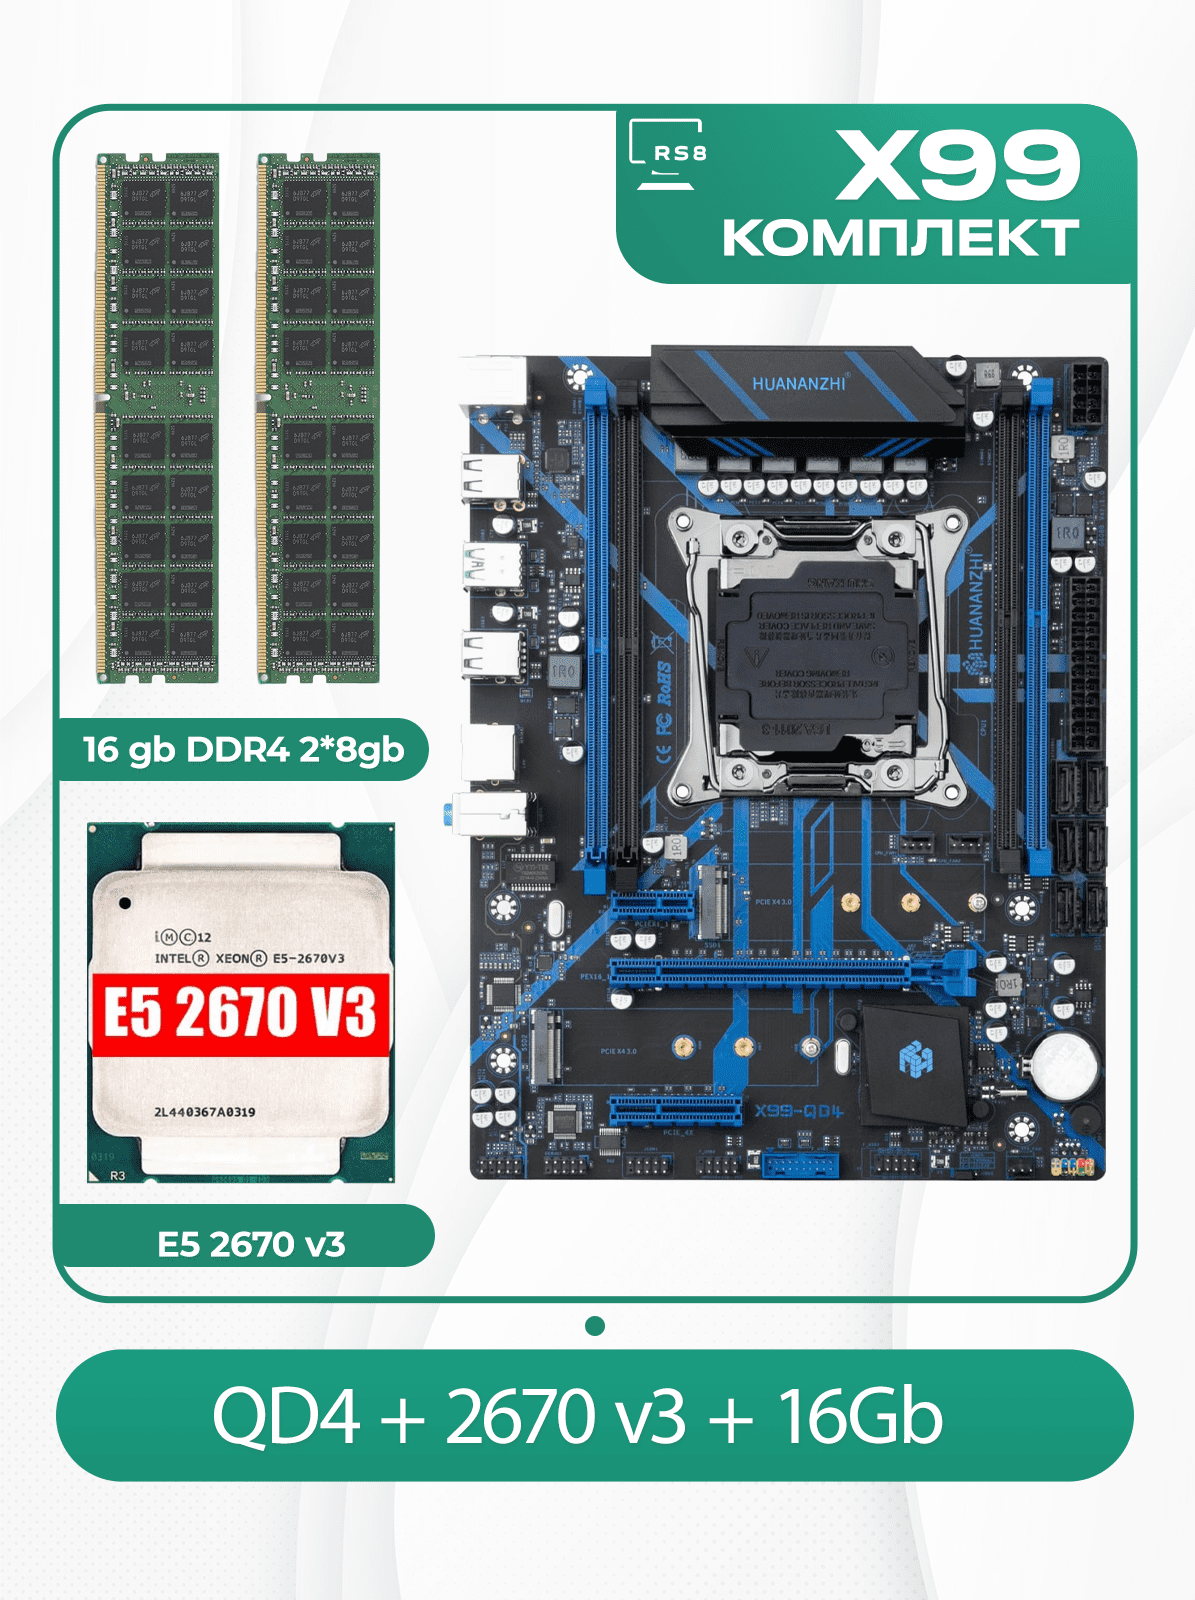 Комплект материнской платы X99: Huananzhi QD4 2011v3 + Xeon E5 2670v3 + DDR4